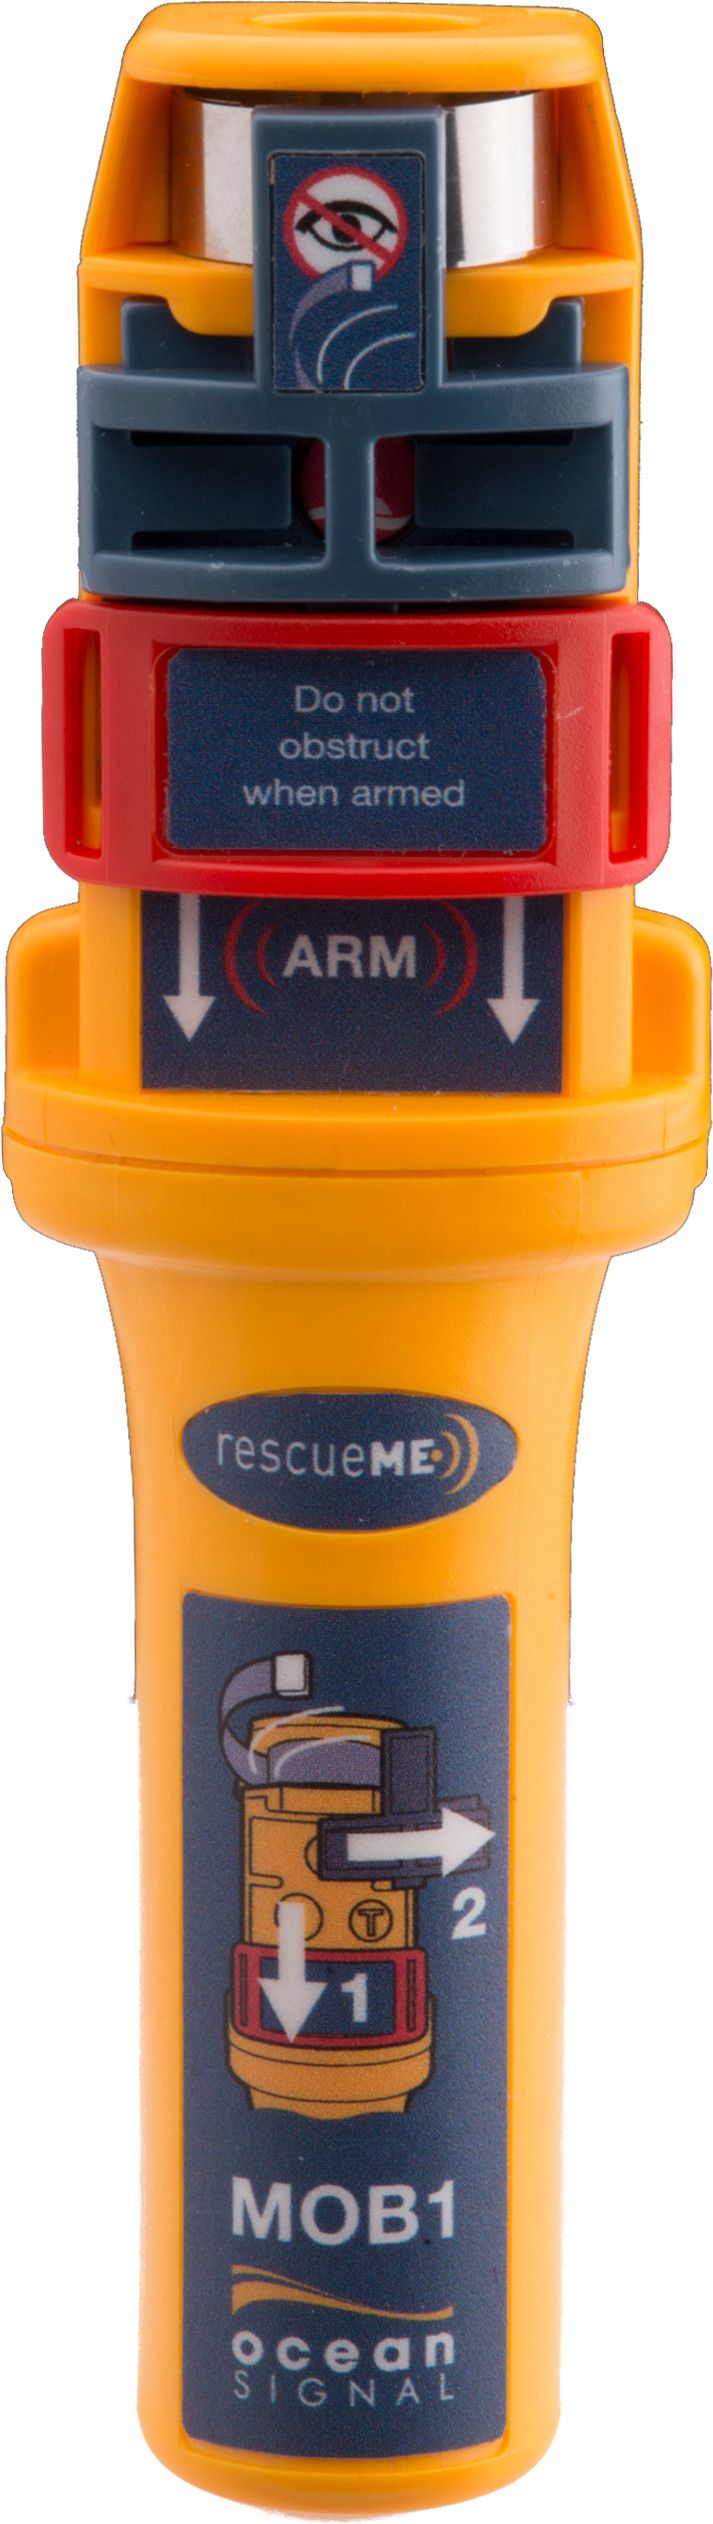 Hi-res image - ACR Electronics - The Ocean Signal rescueME MOB1